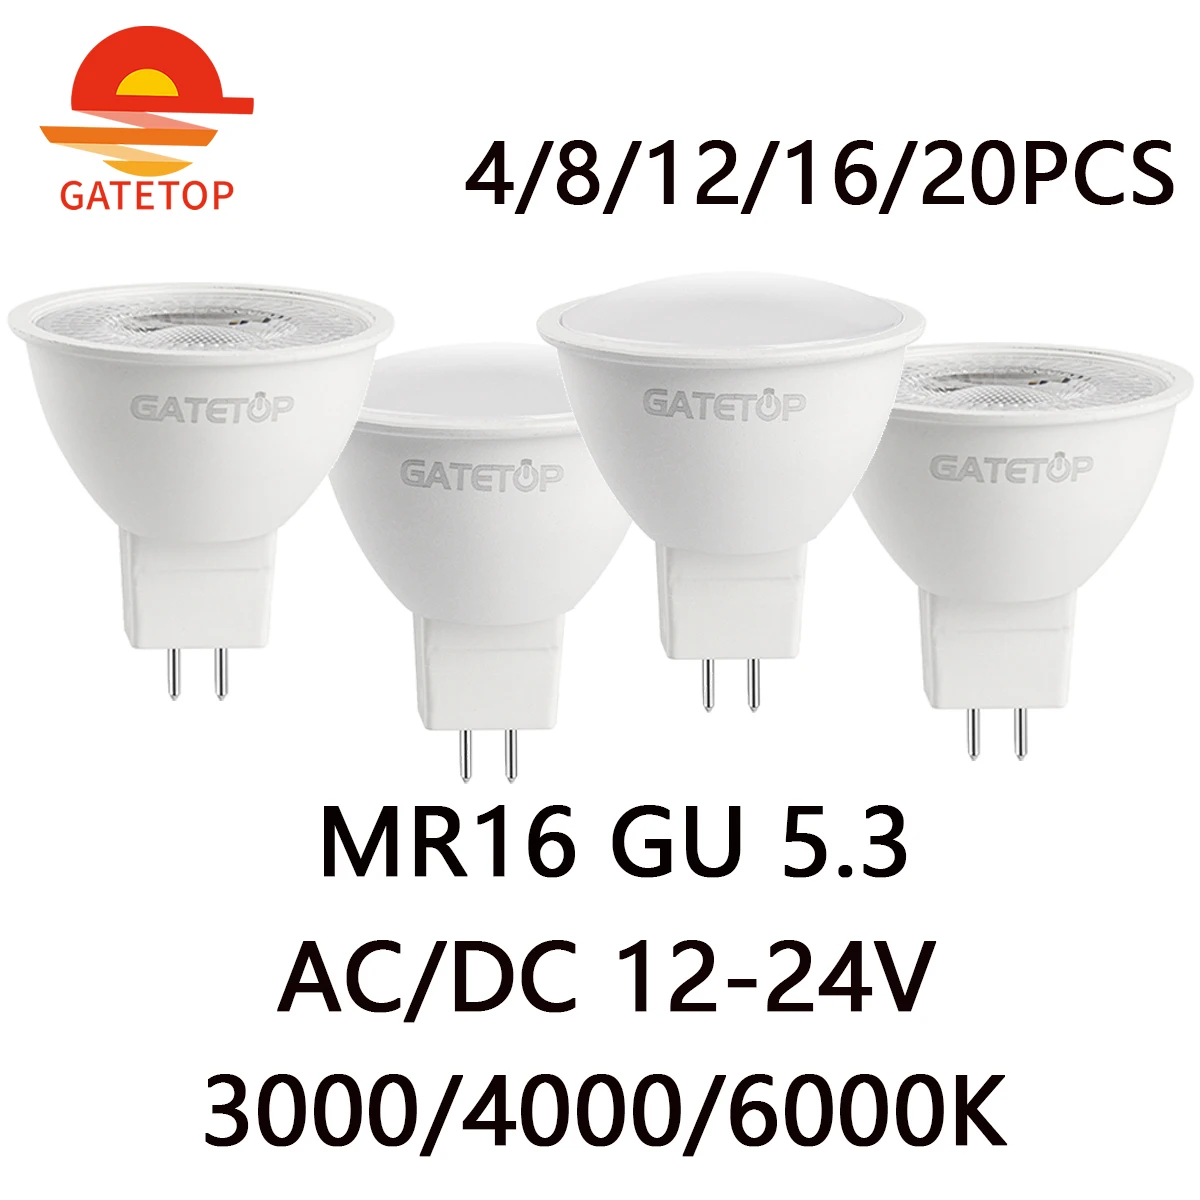 

4-20PCS LED spotlight GU5.3 low voltage AC/DC 12V-24V no flickering warm white light 3W-7W can replace 20W 50W halogen lamp